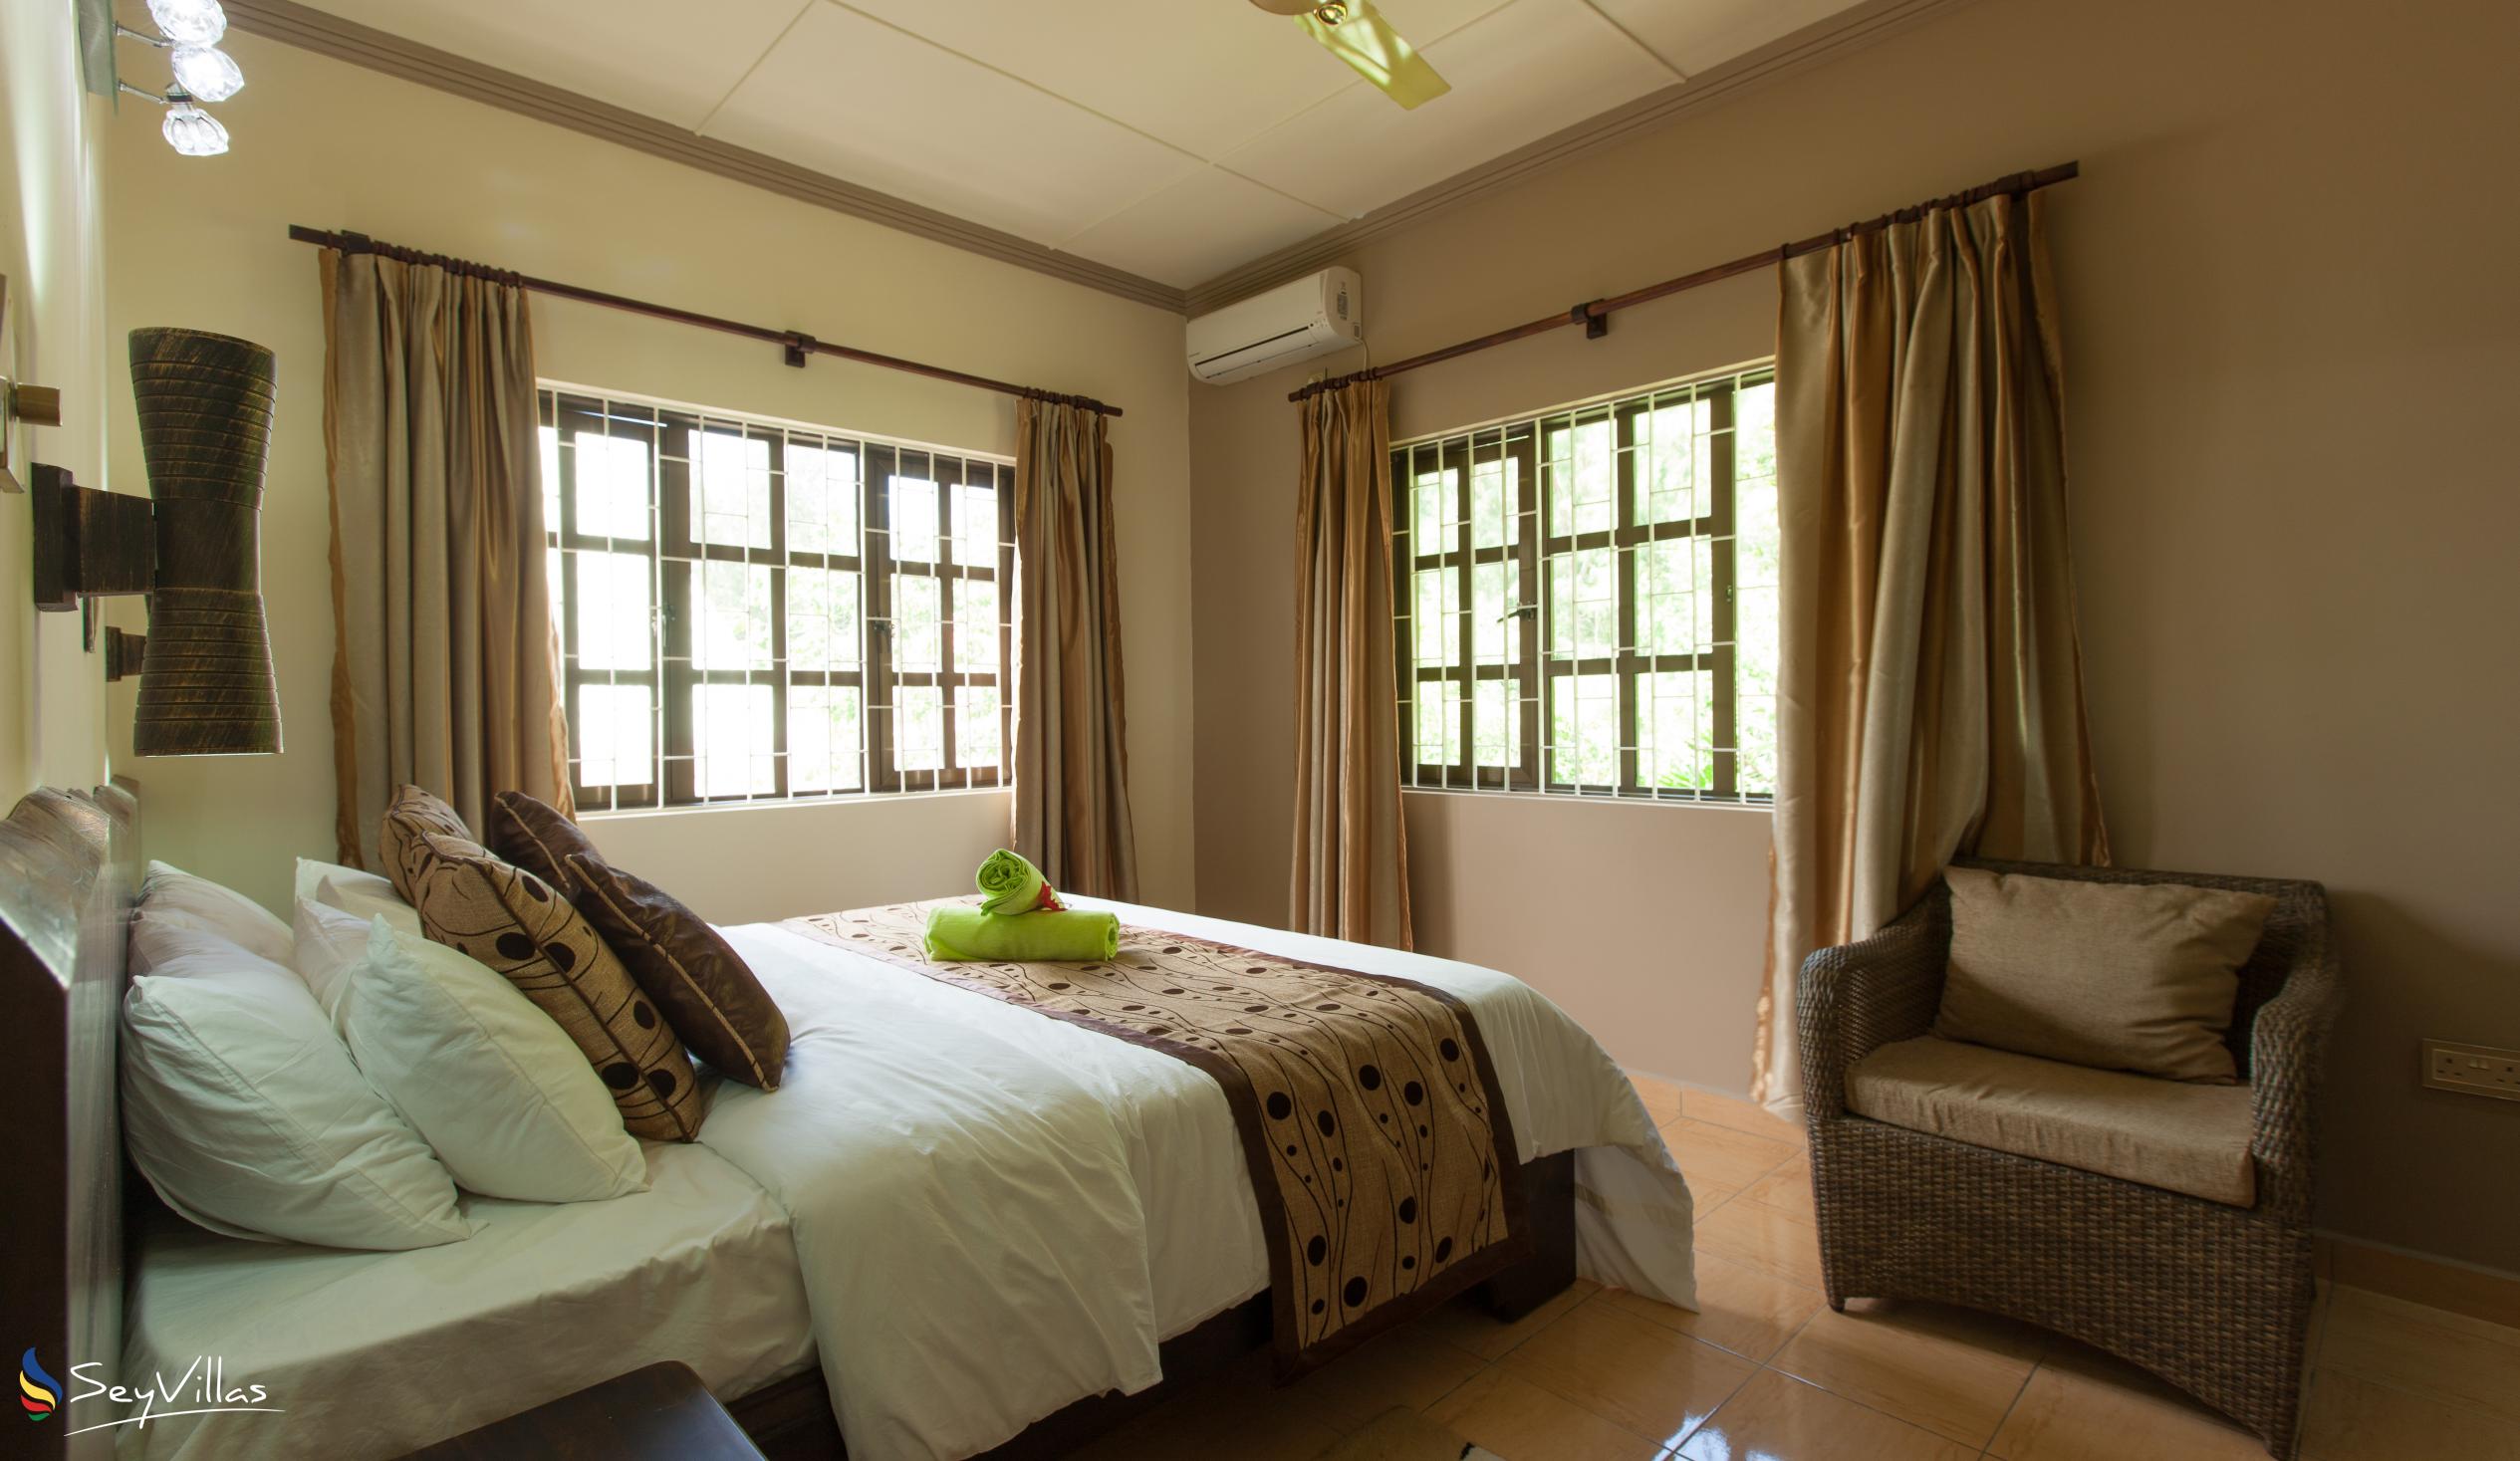 Photo 79: Chez Bea Villa - Superior Room - Praslin (Seychelles)